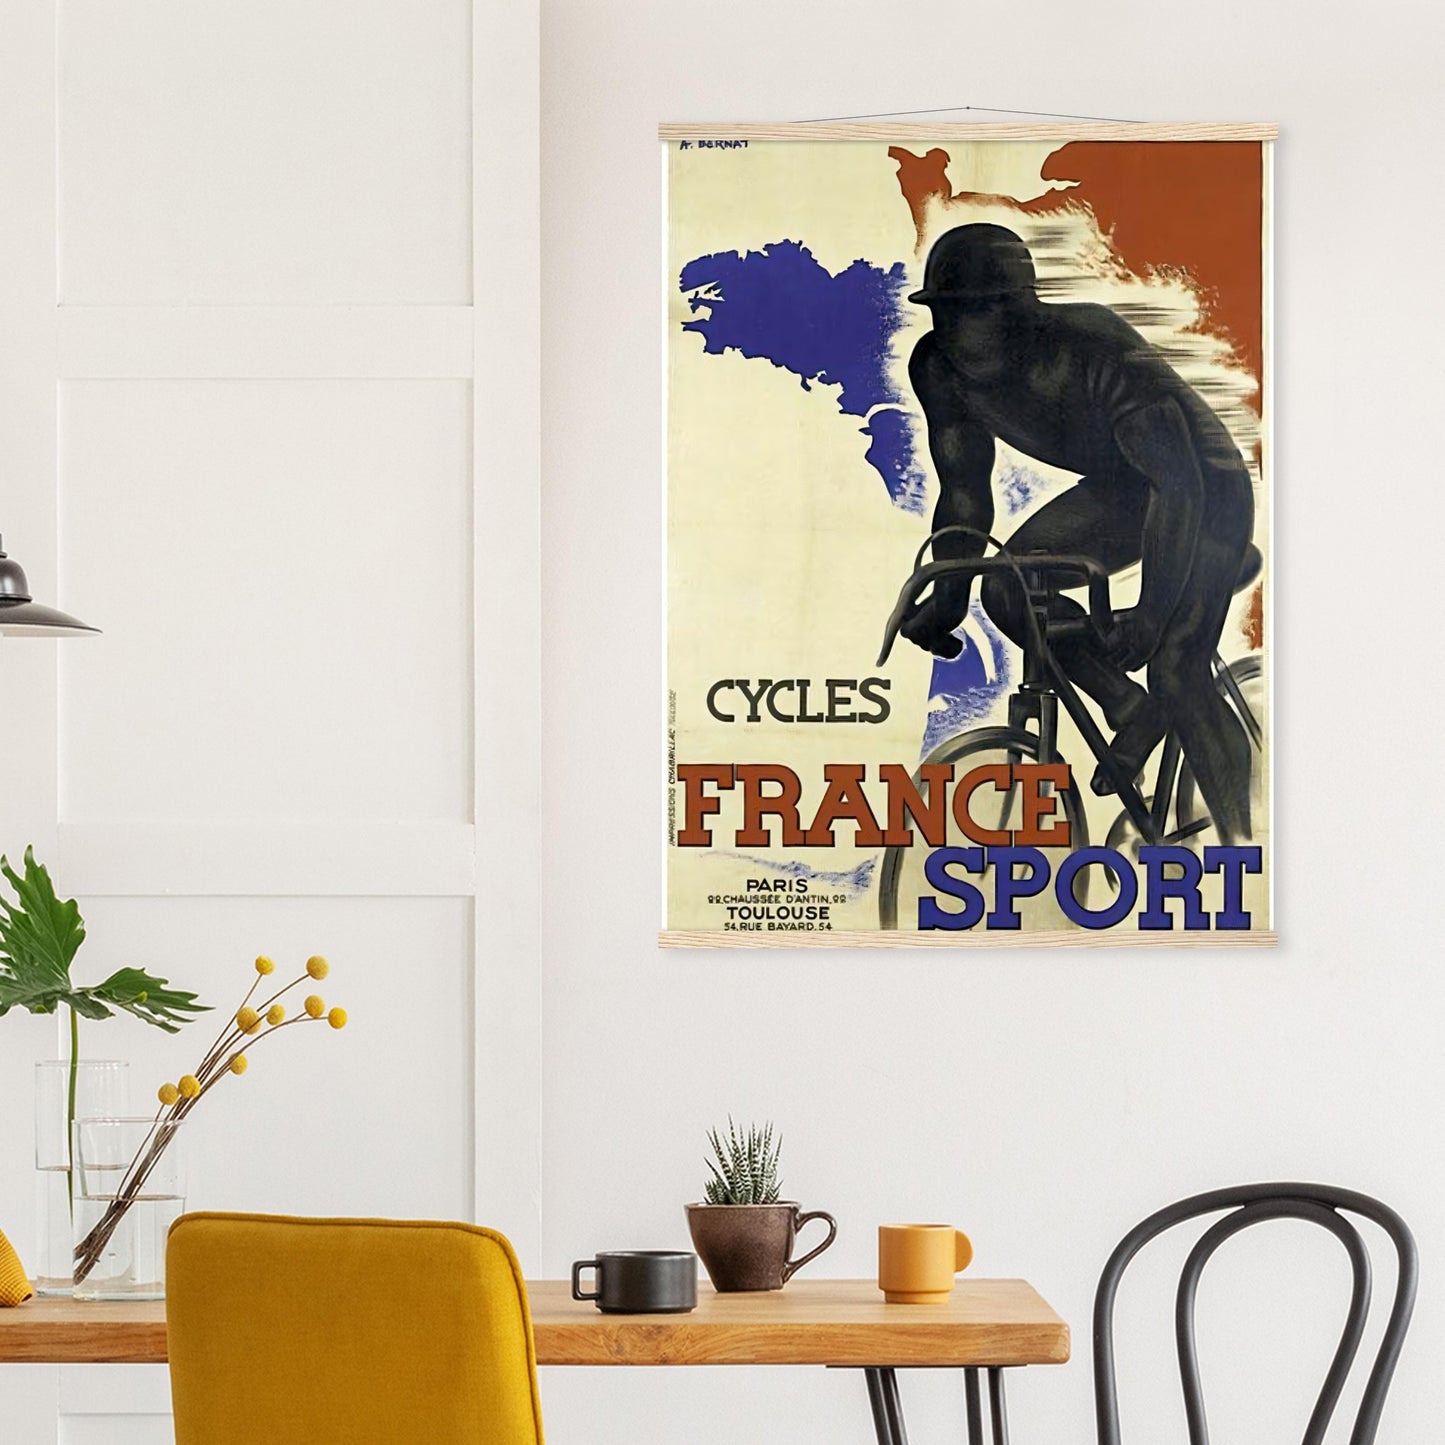 France Sport Vintage Poster Reprint on Premium Matte Paper - Posterify